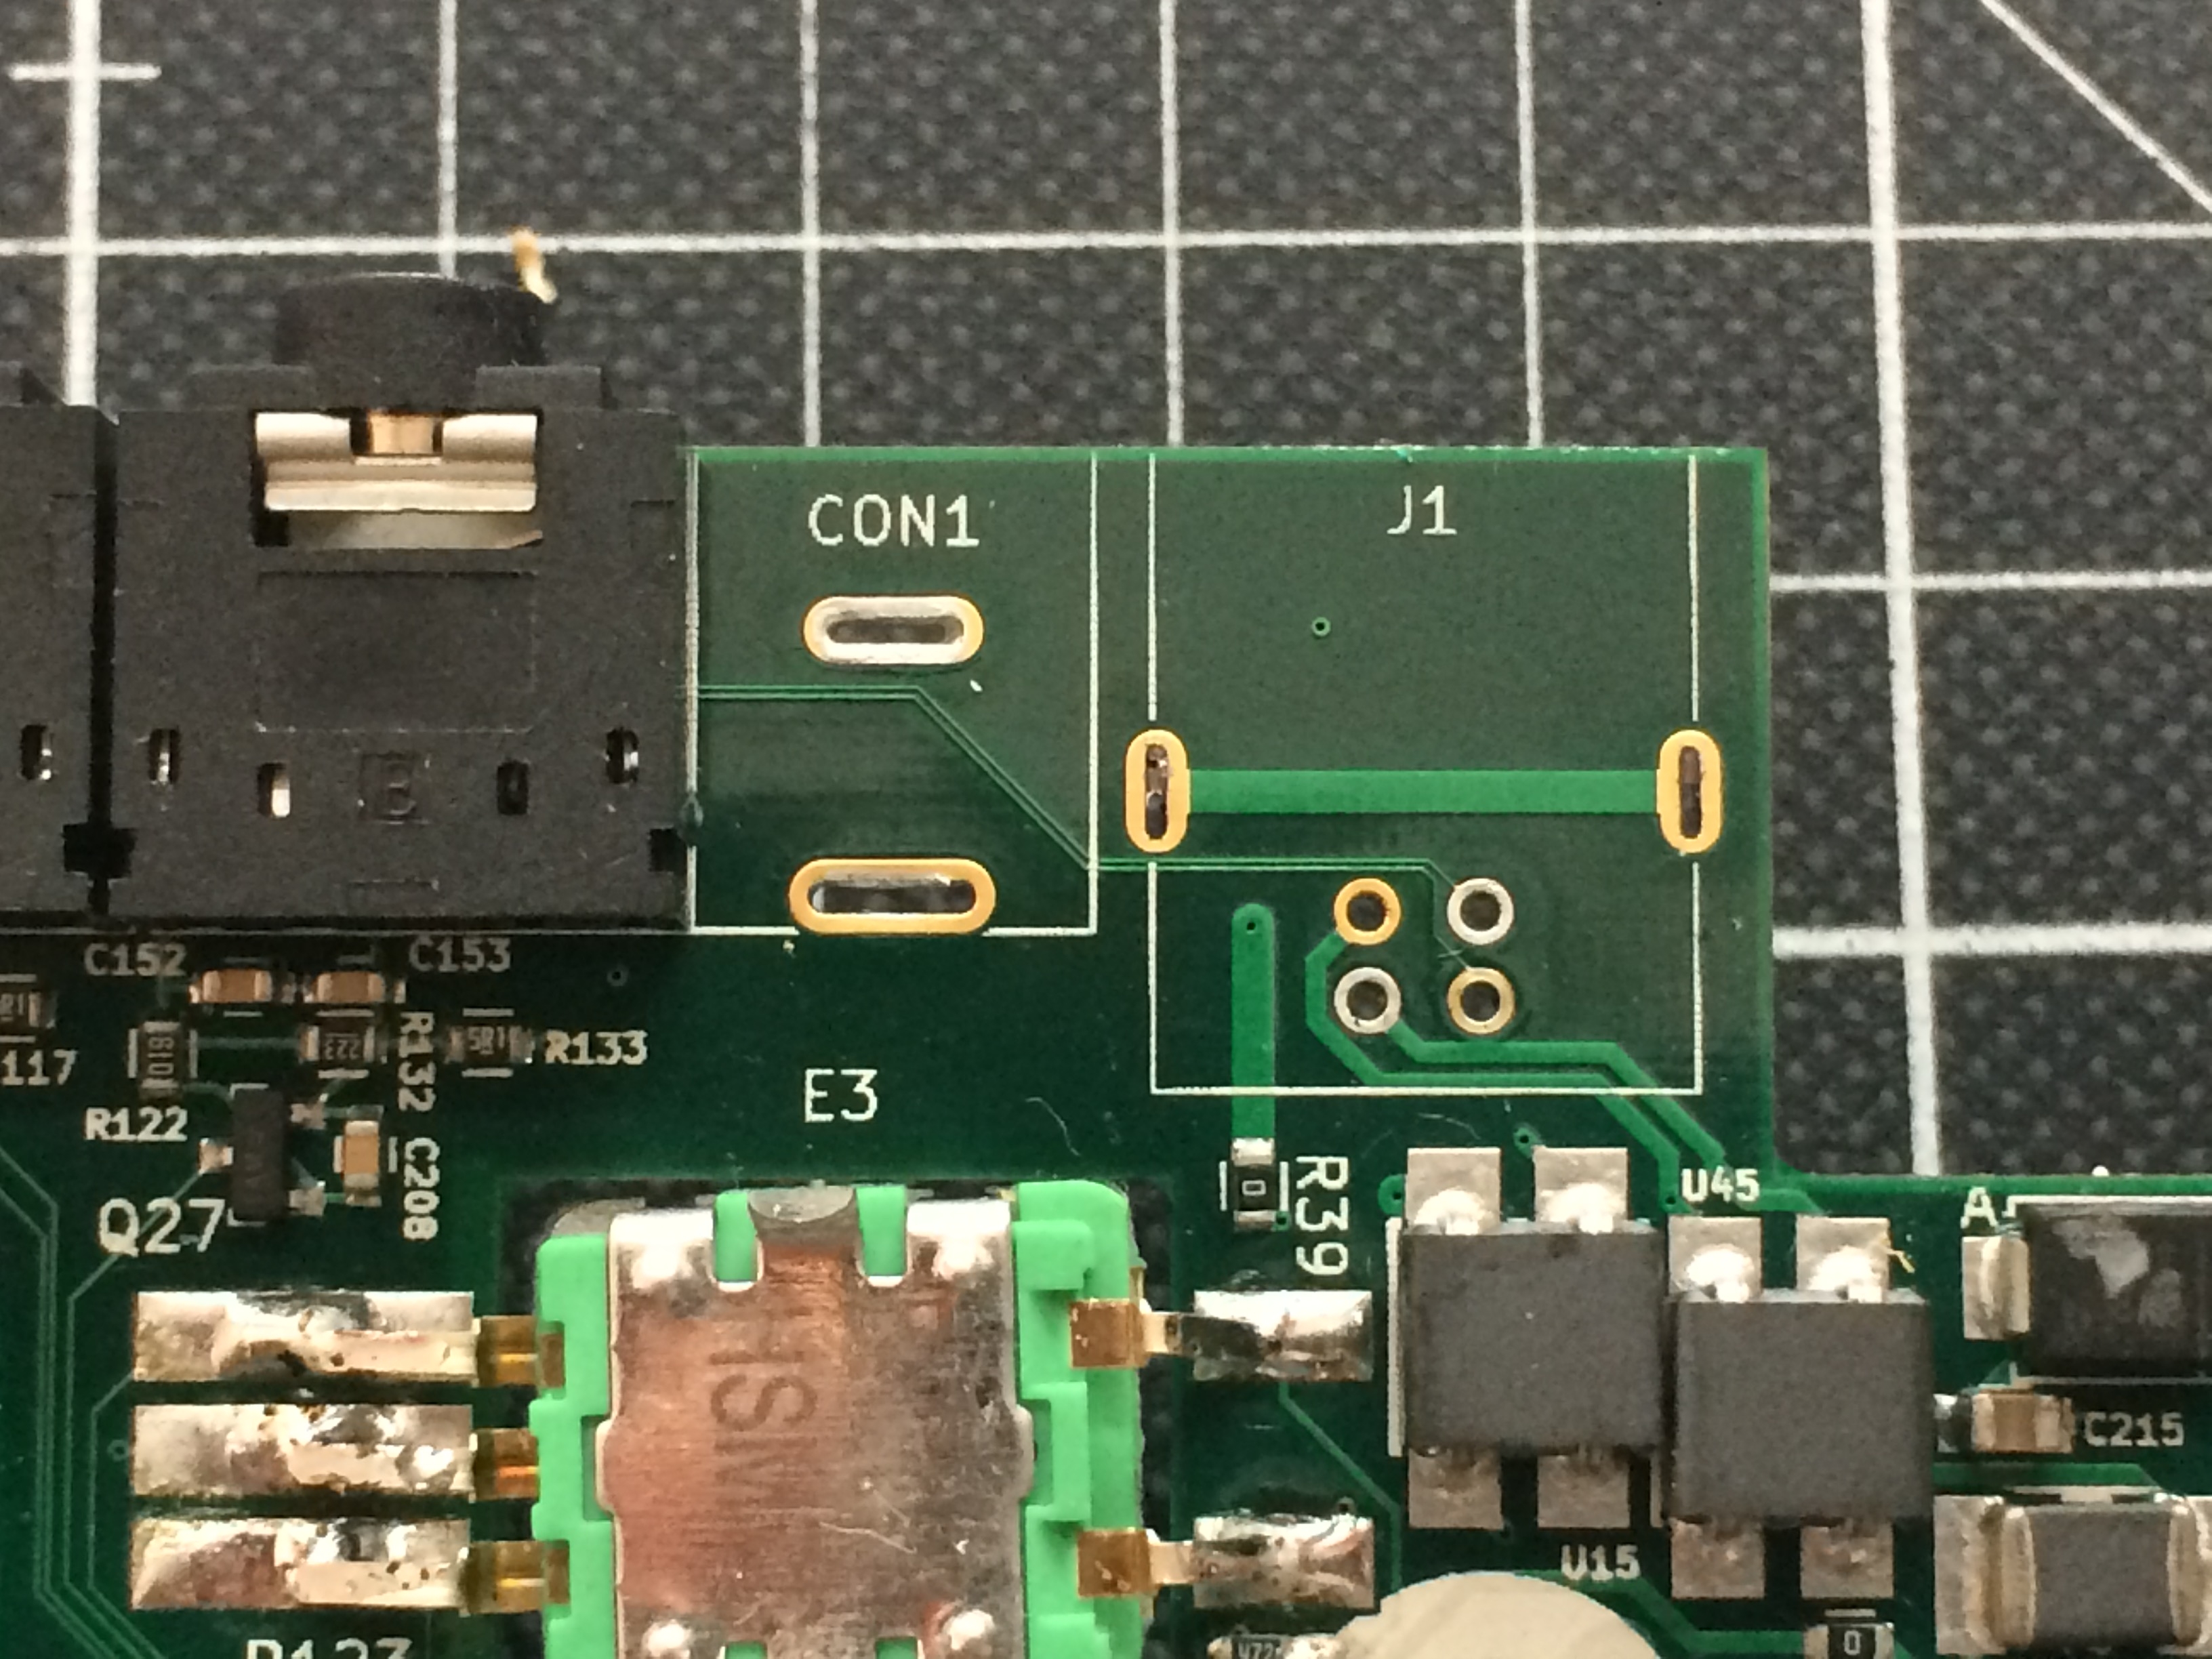 Solderpads of desoldered connectors